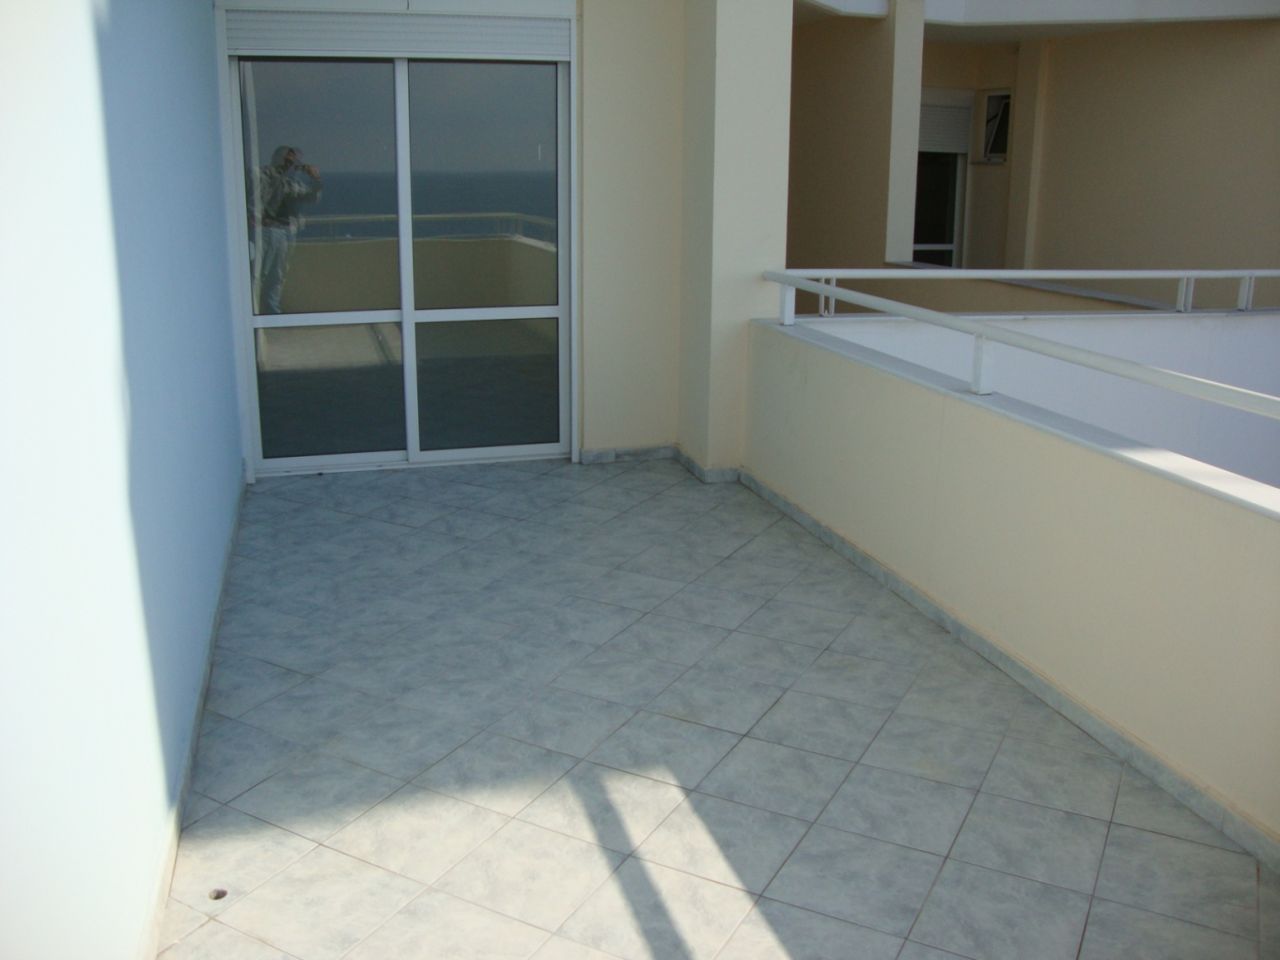 Apartment for sale in Saranda. Seaview apartments for sale in Albania.